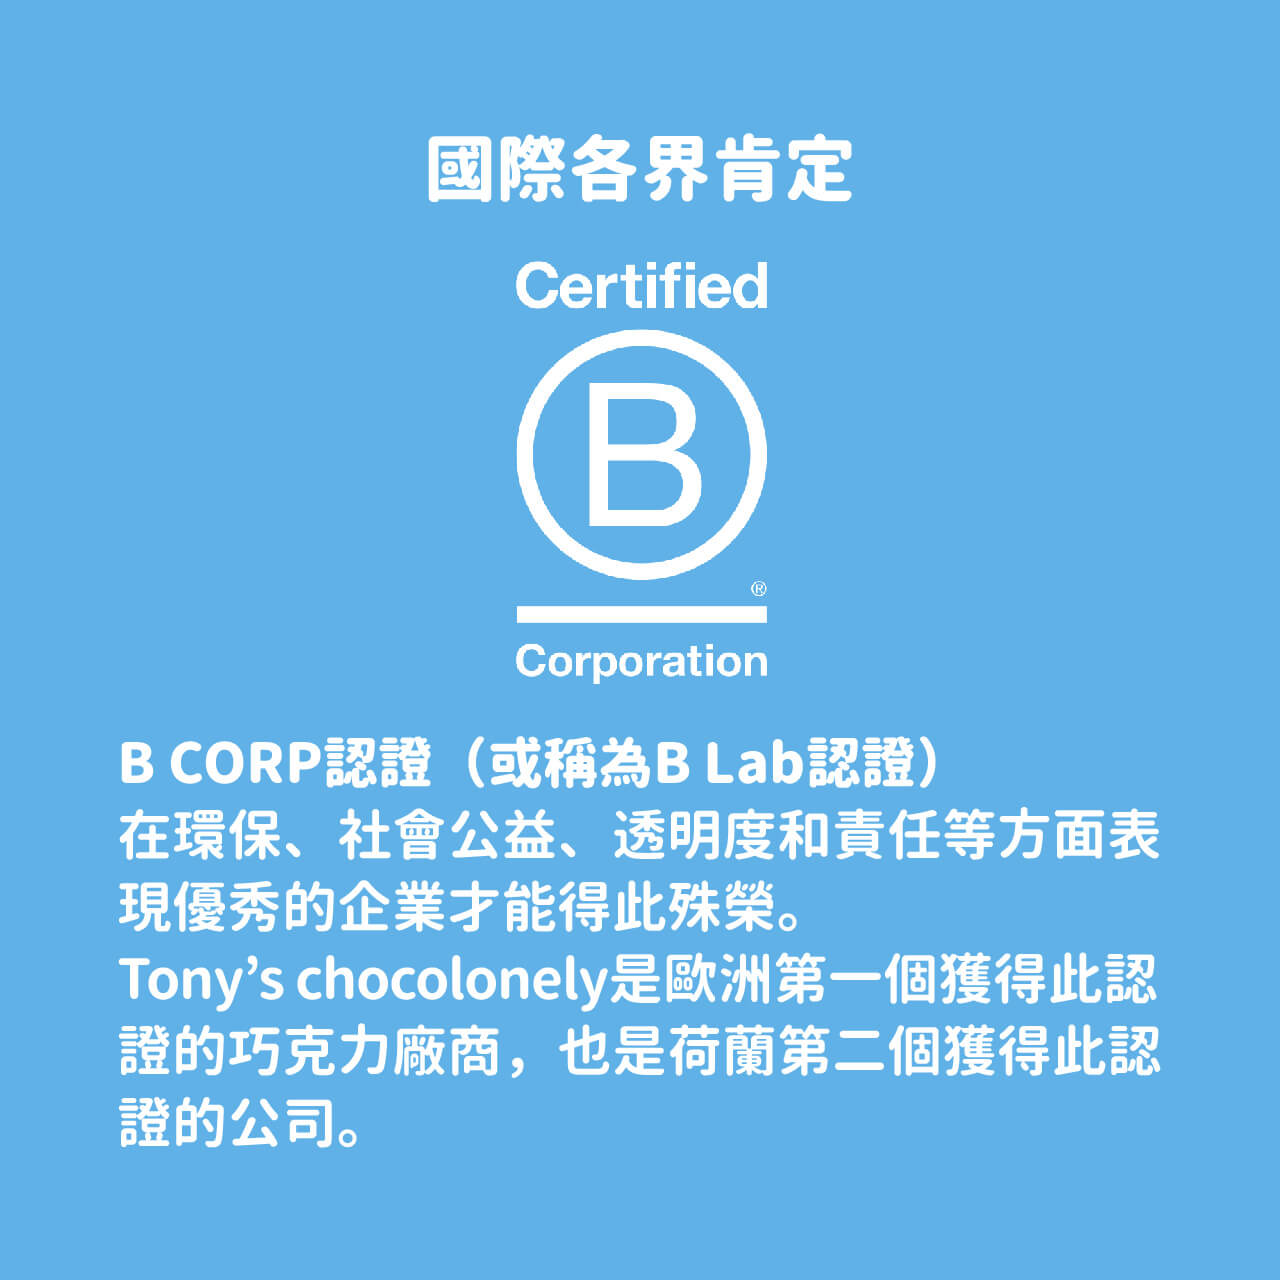 B型企業,東尼巧克力,歐洲第一間B型巧克力工廠